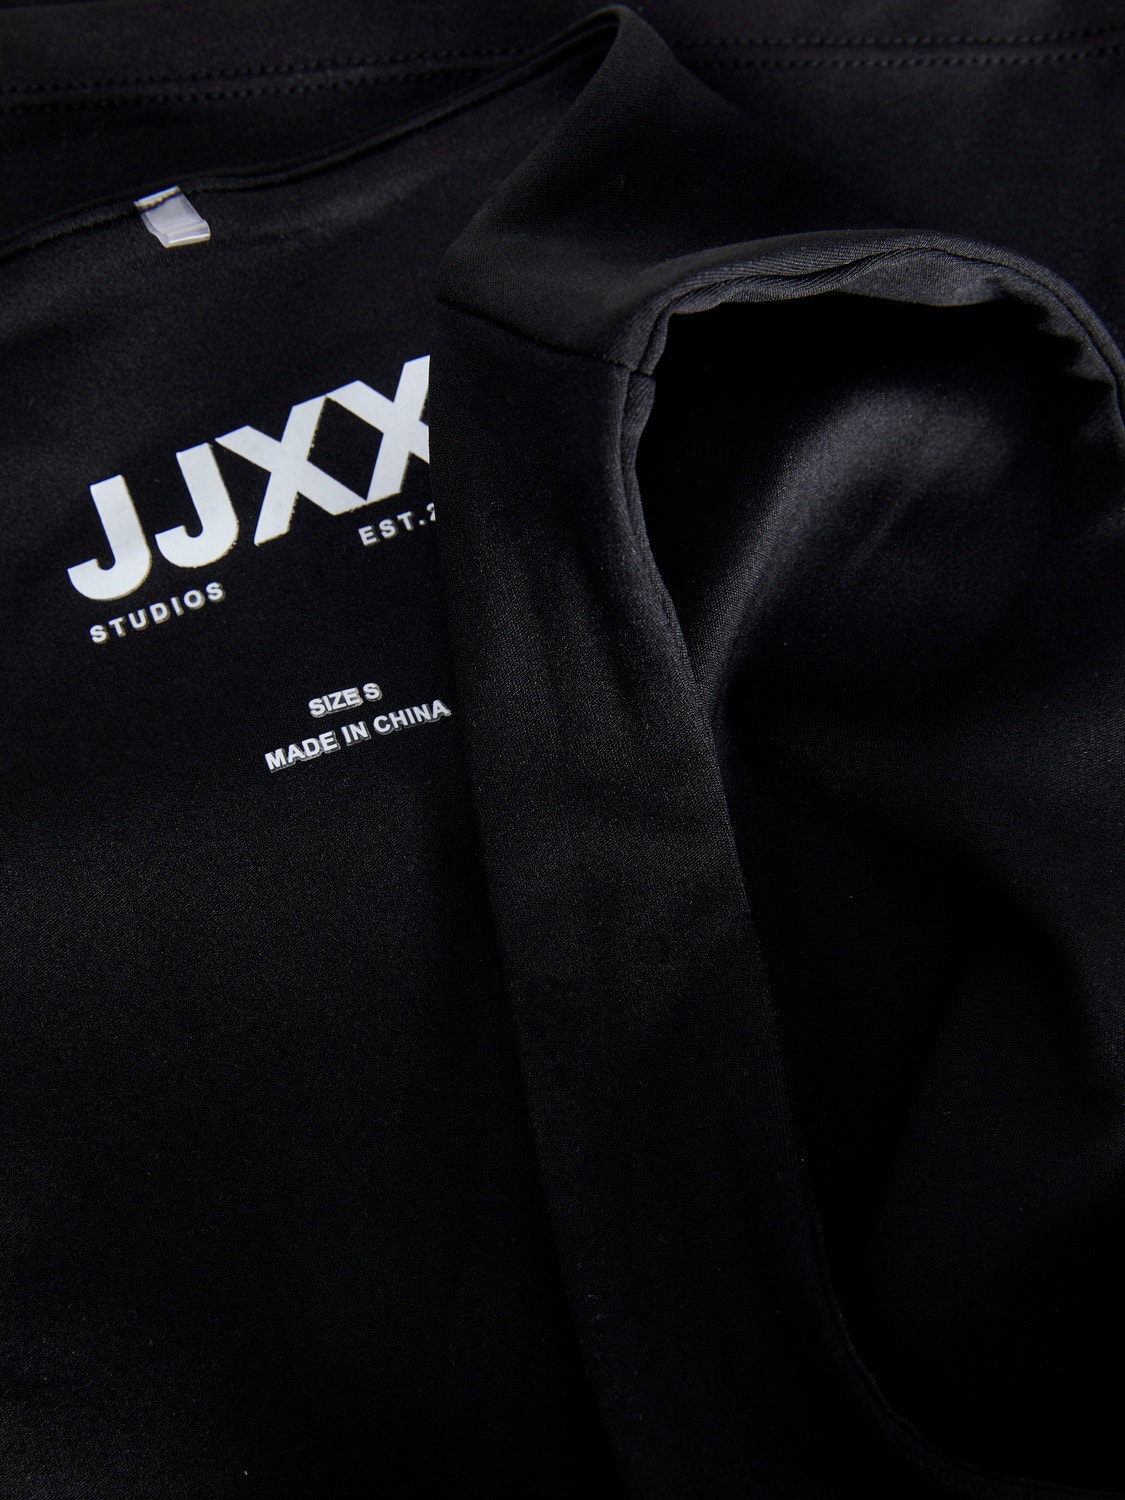 JJXX JXSAGA Hihaton toppi -Black - 12234140